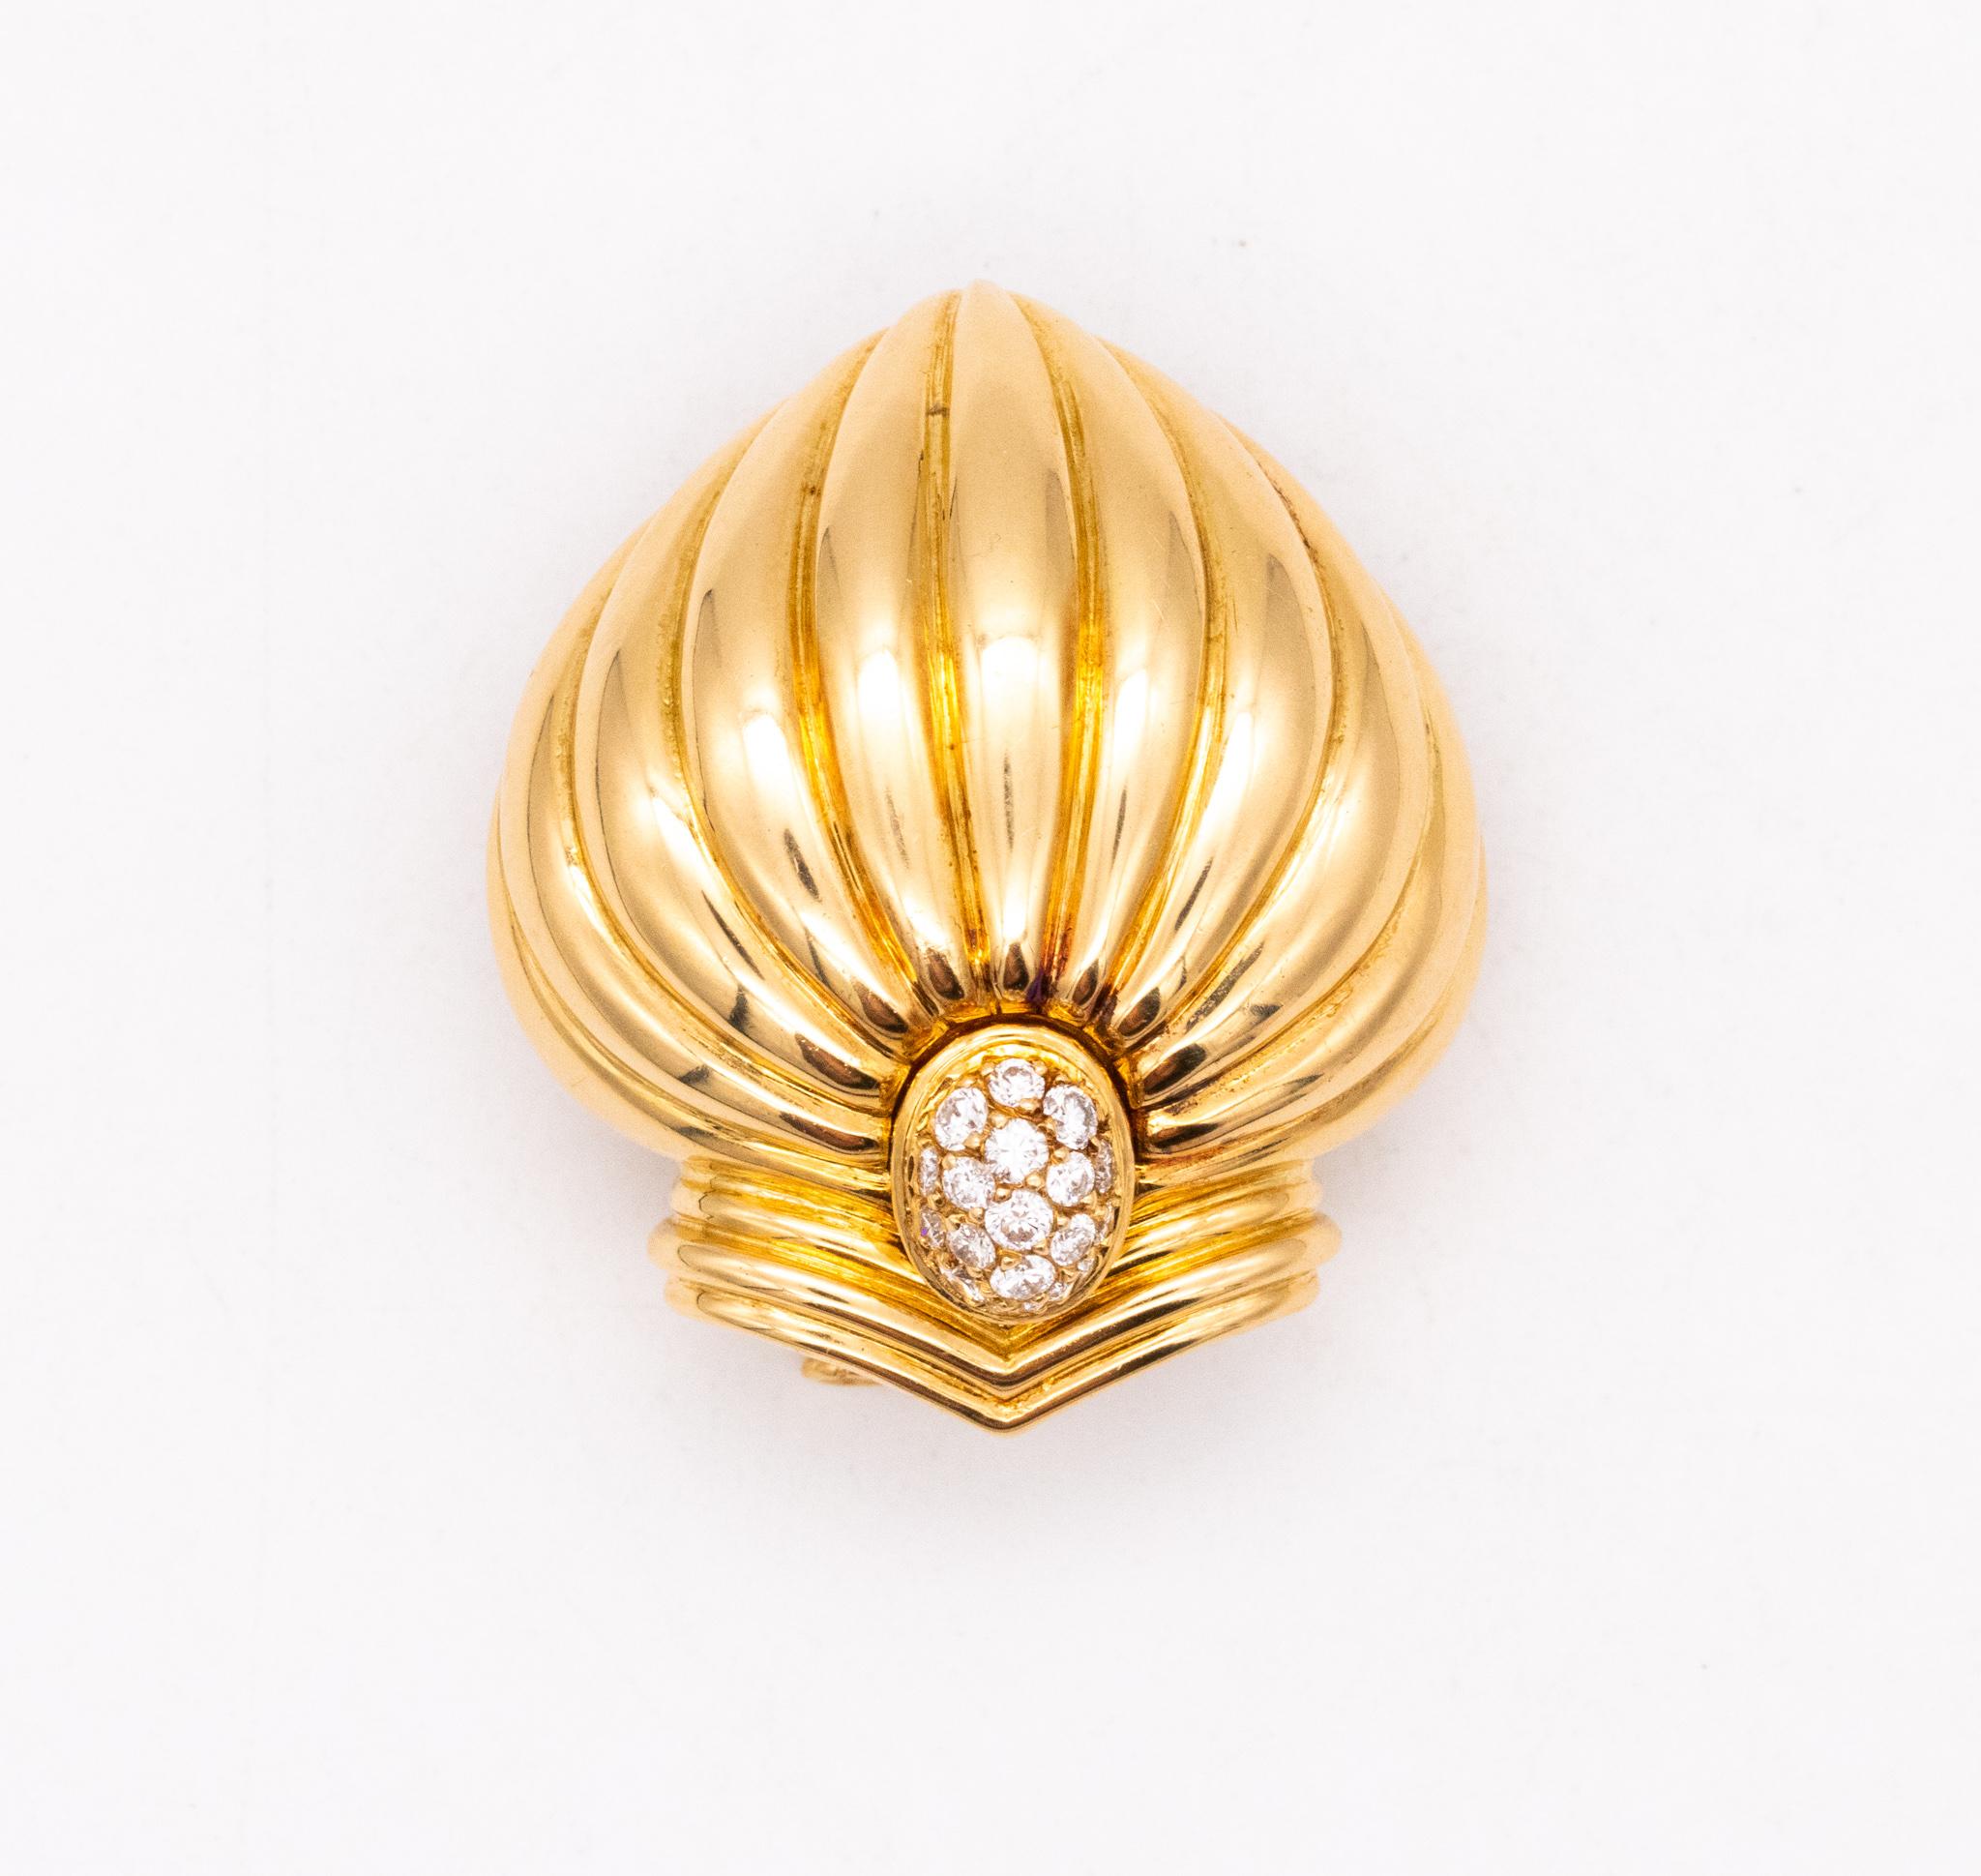 Boucheron Paris Iconic Jaipur Pendant Brooch 18Kt Yellow Gold with VVS Diamonds 1